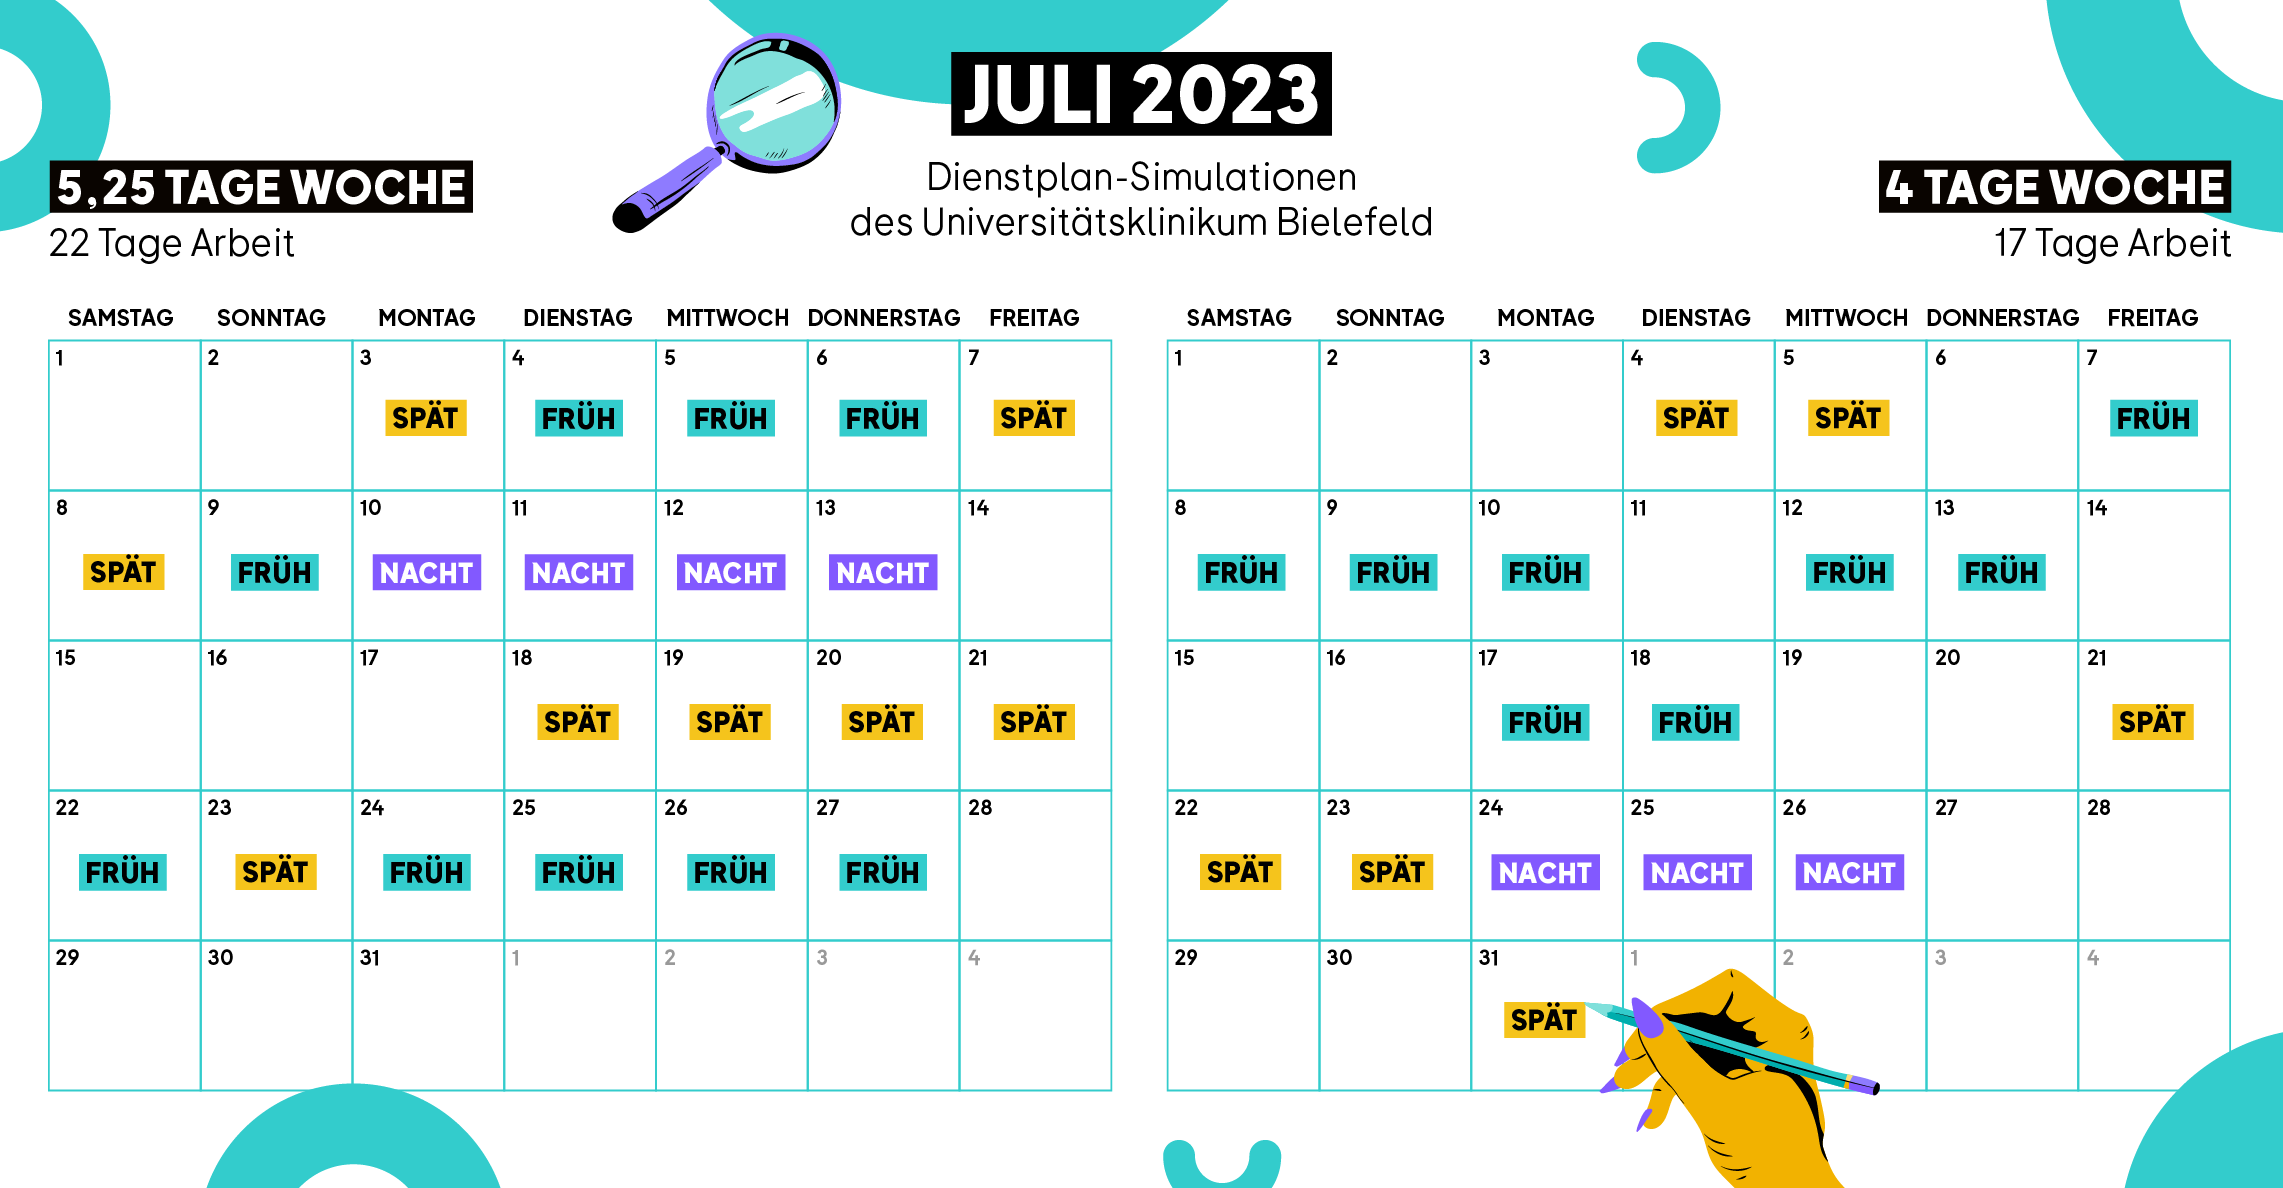 Dienstplan Klinikum Bielefeld_1095x570.png